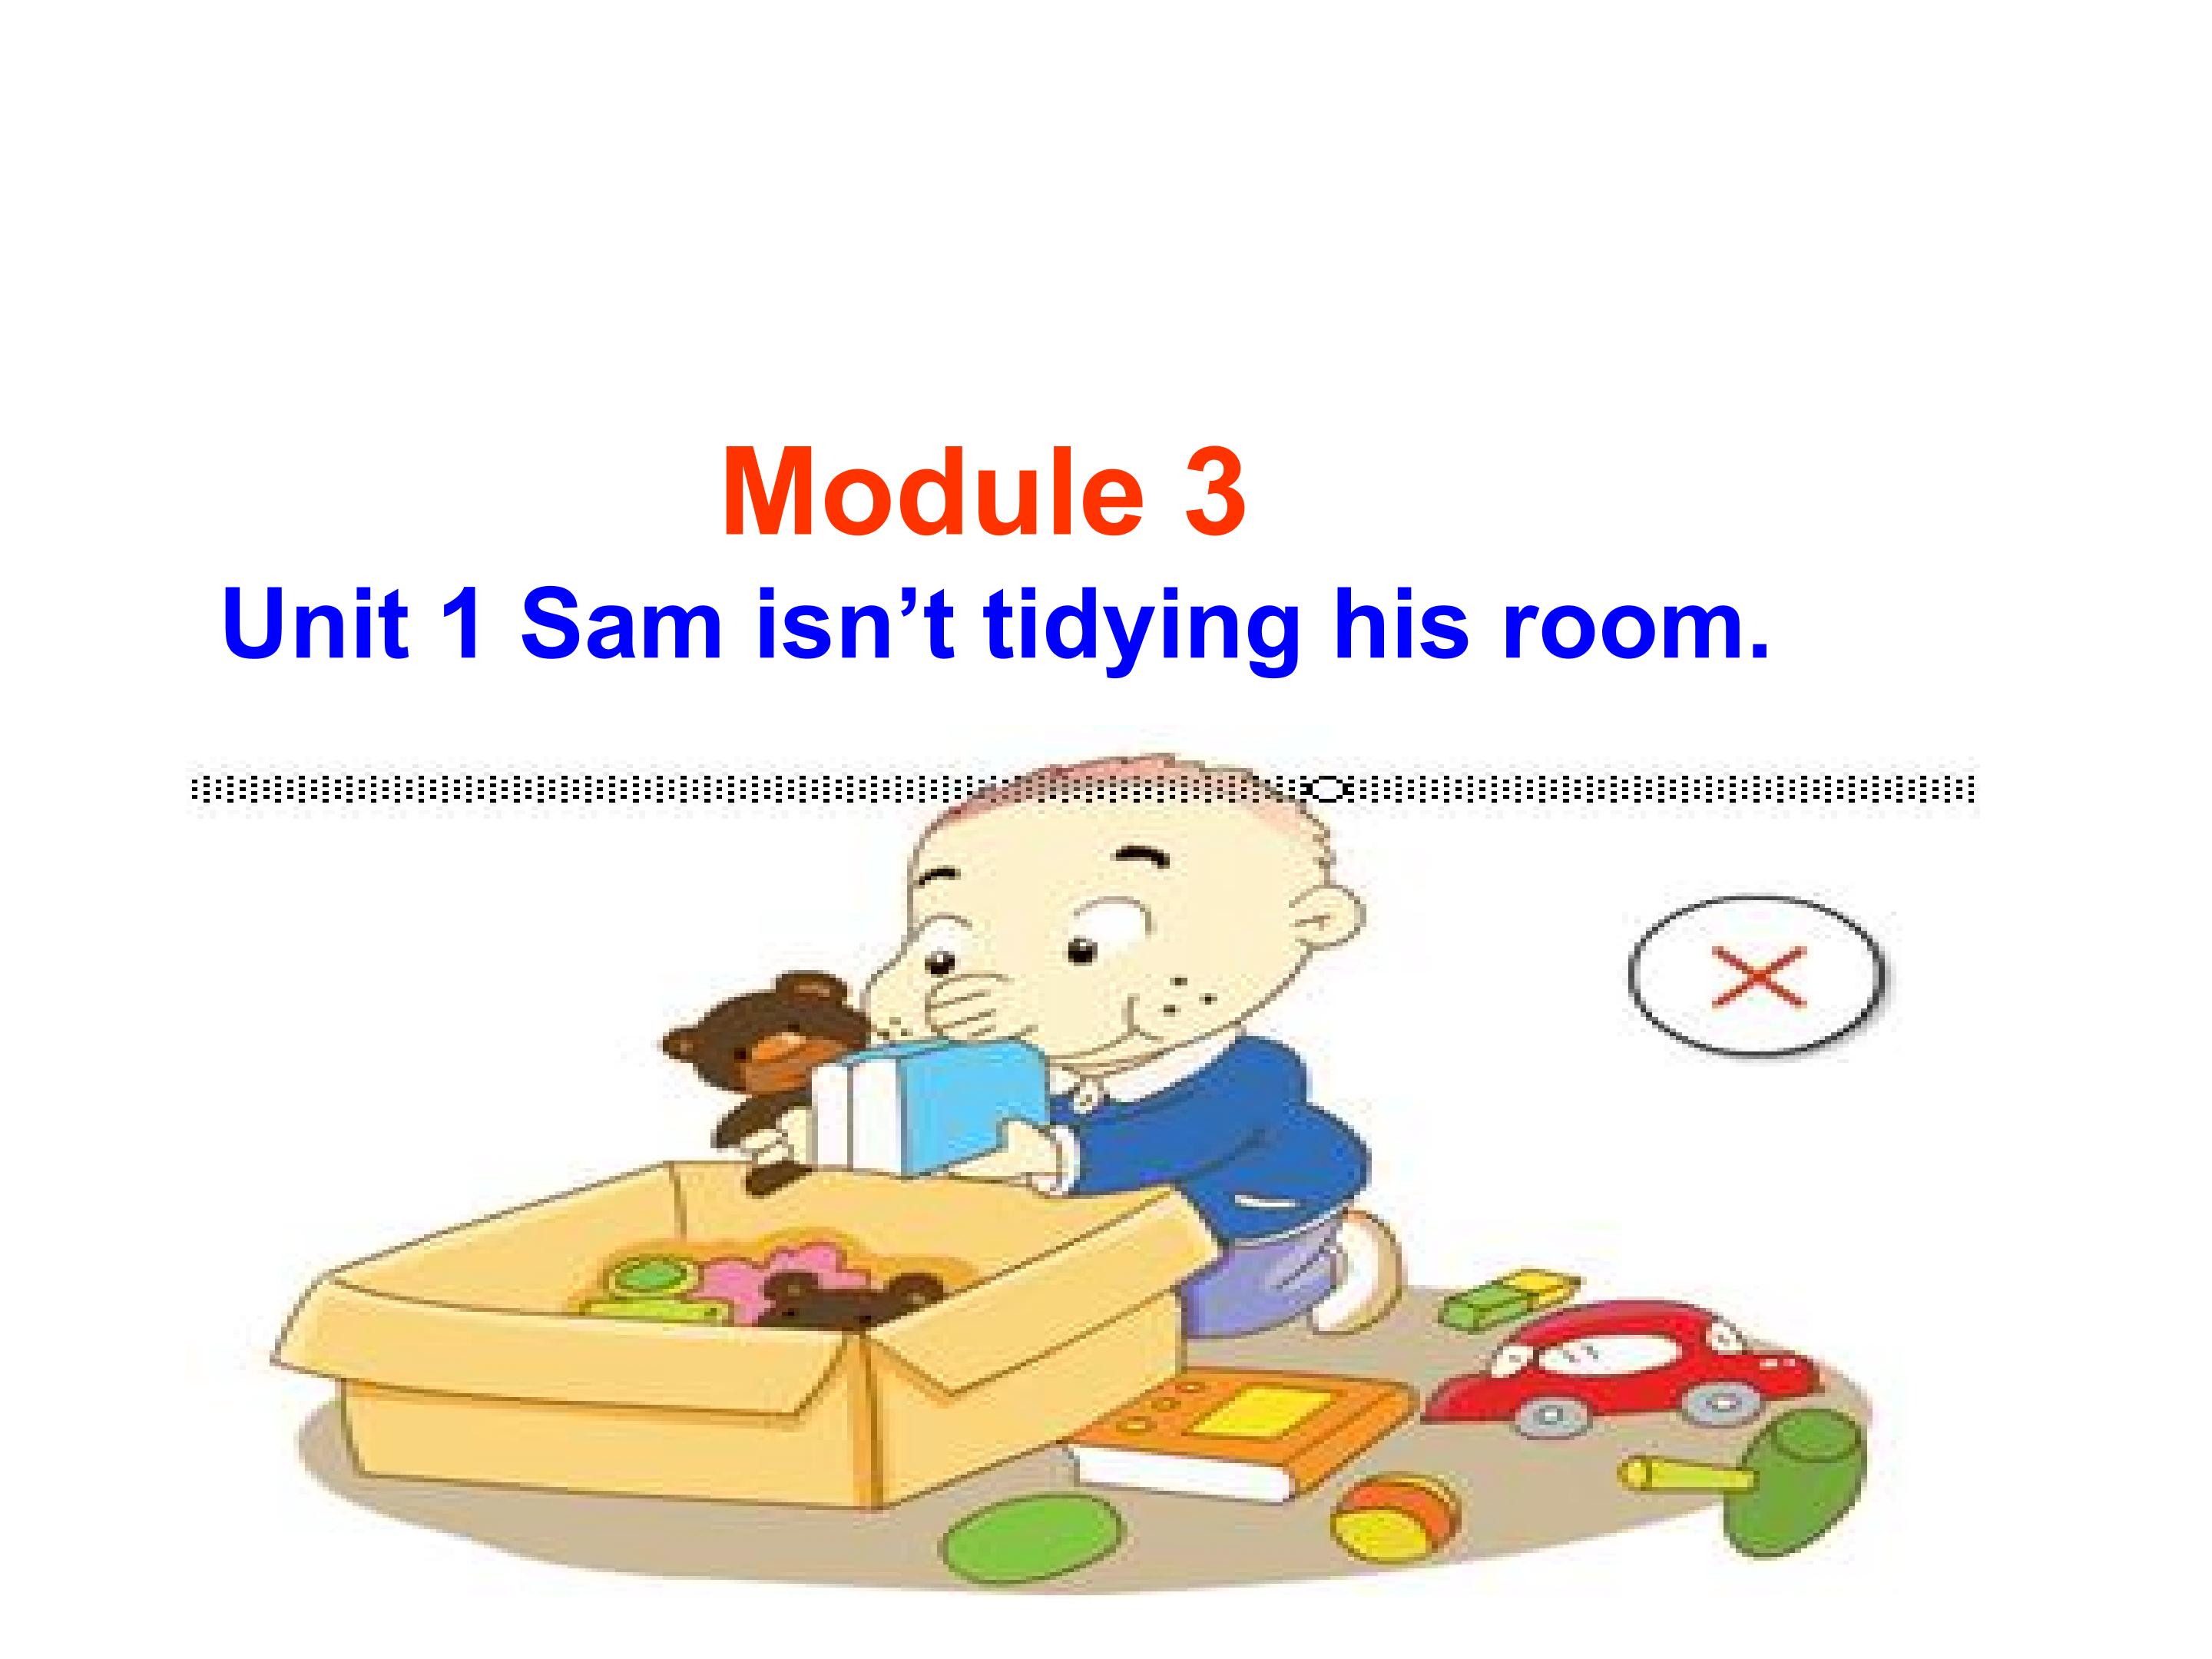 M3U1 Sam isn't tidying his room